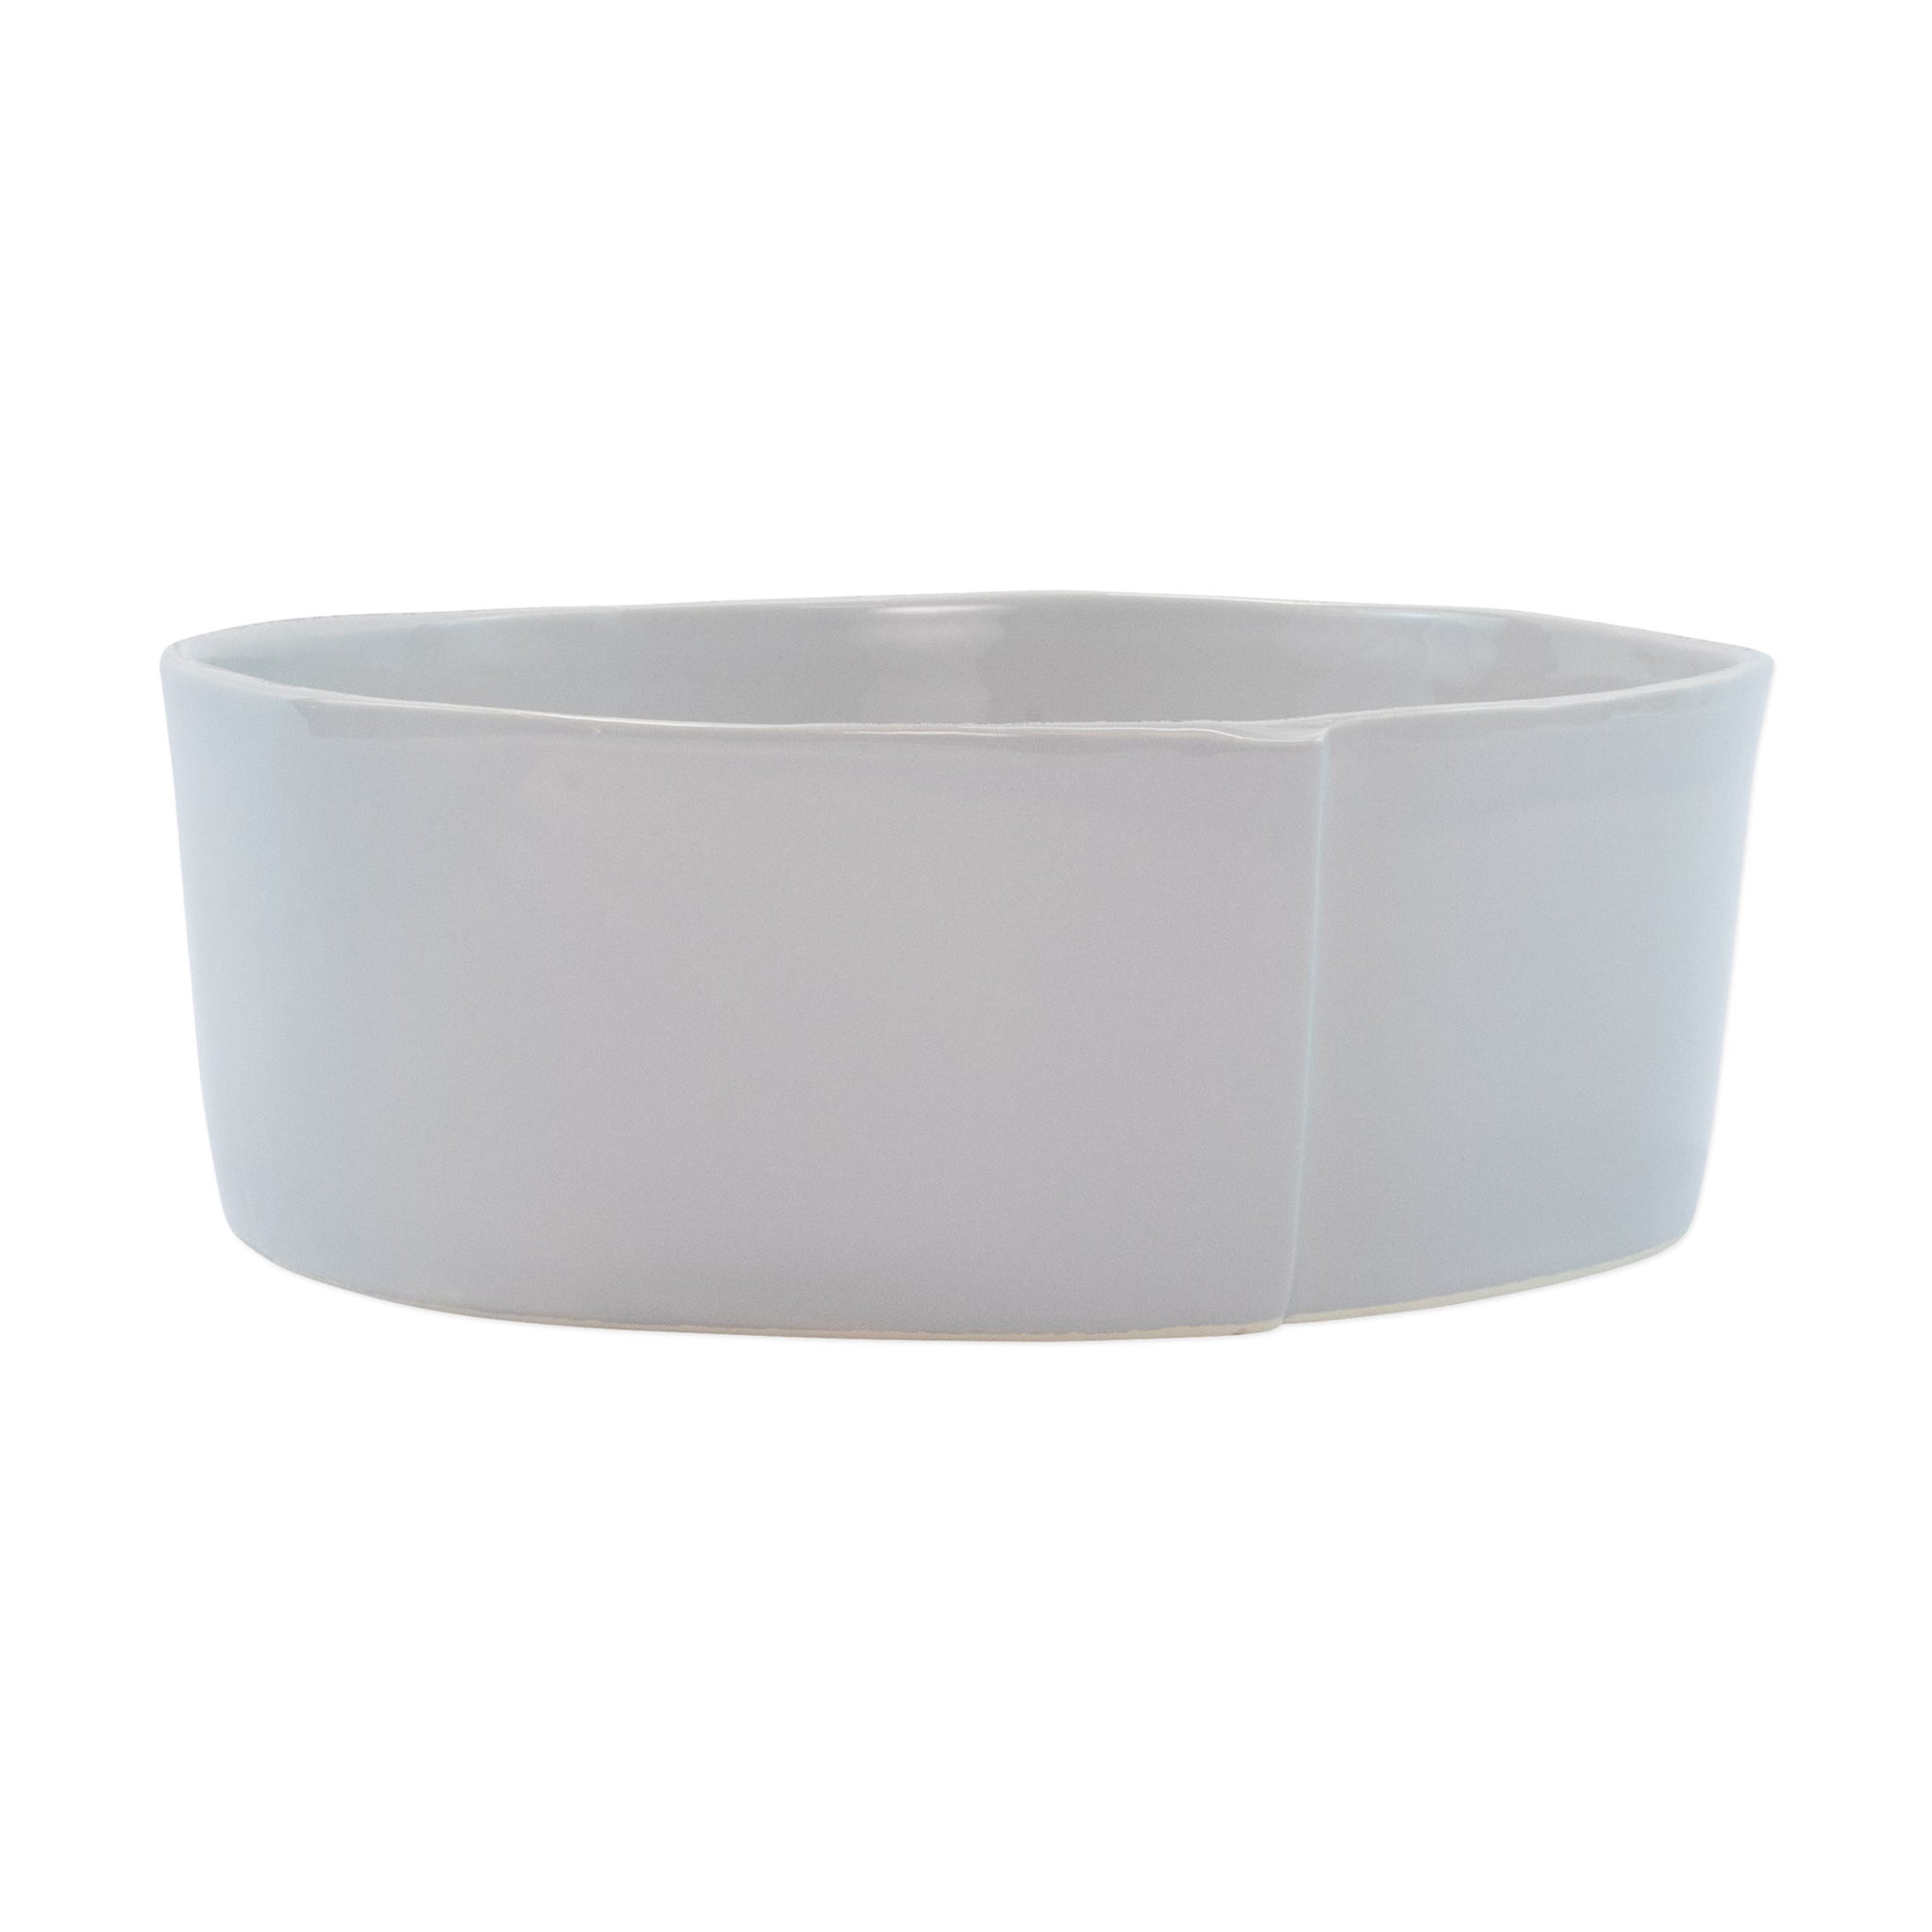 Lastra Serving Bowl - Large - Light Gray